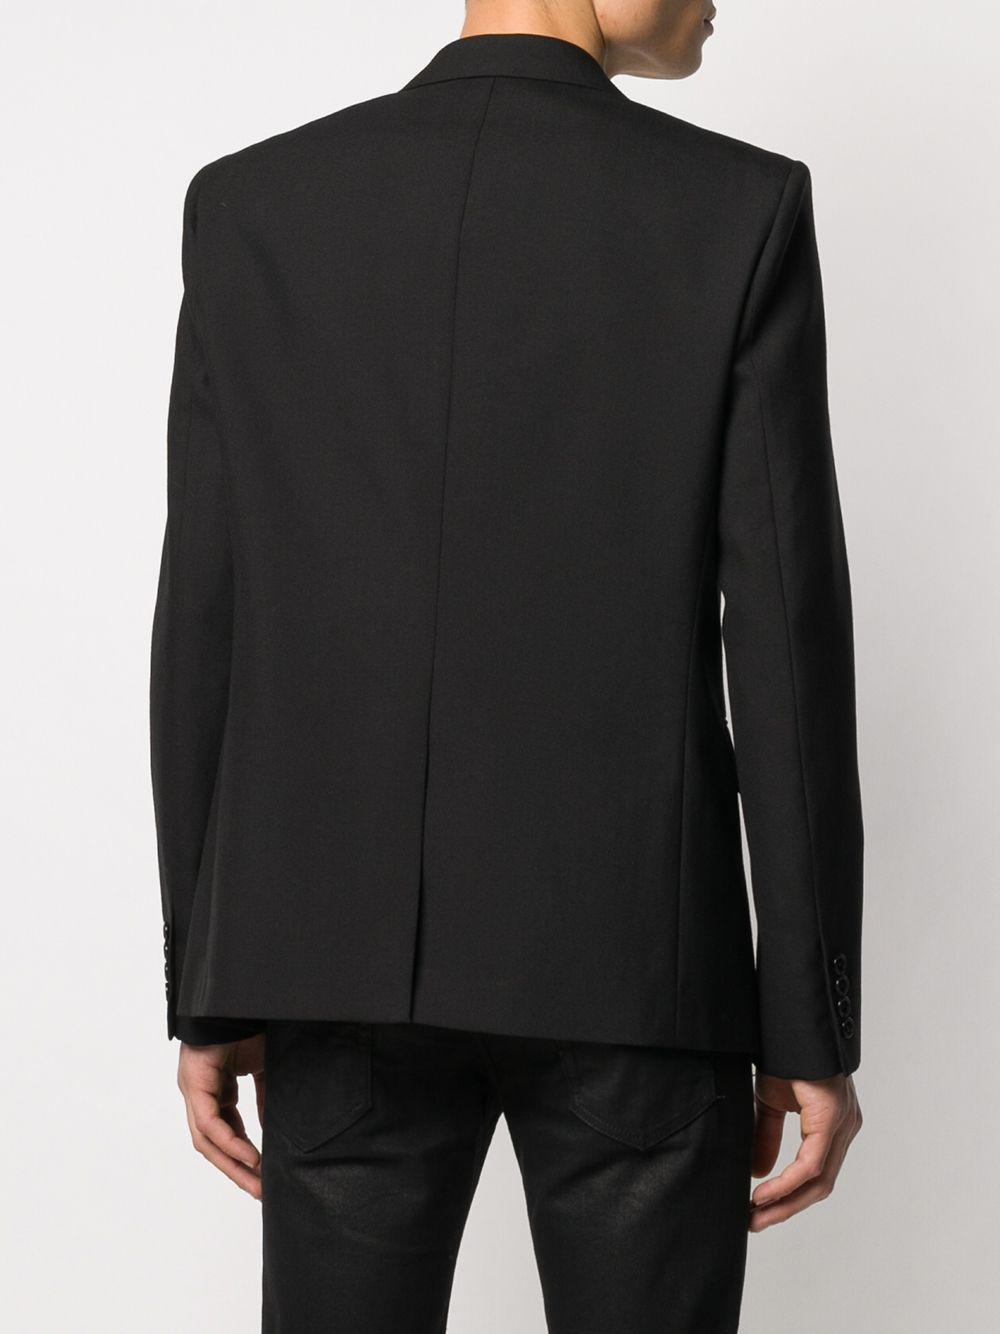 Saint Laurent Wool Single-breasted Blazer in Black for Men - Lyst